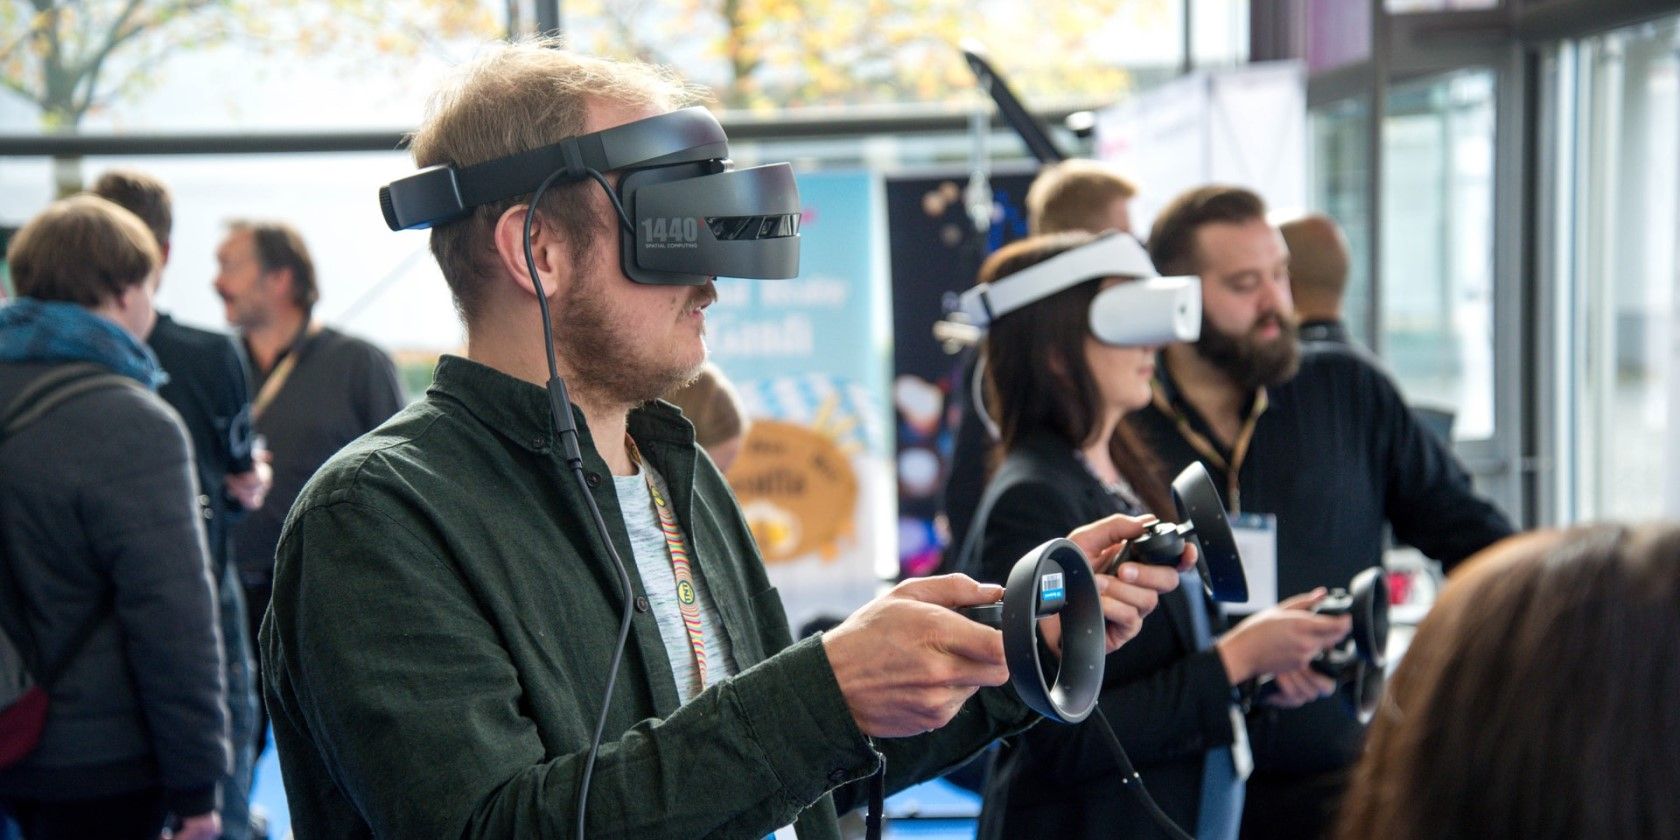 Virtual reality at convention